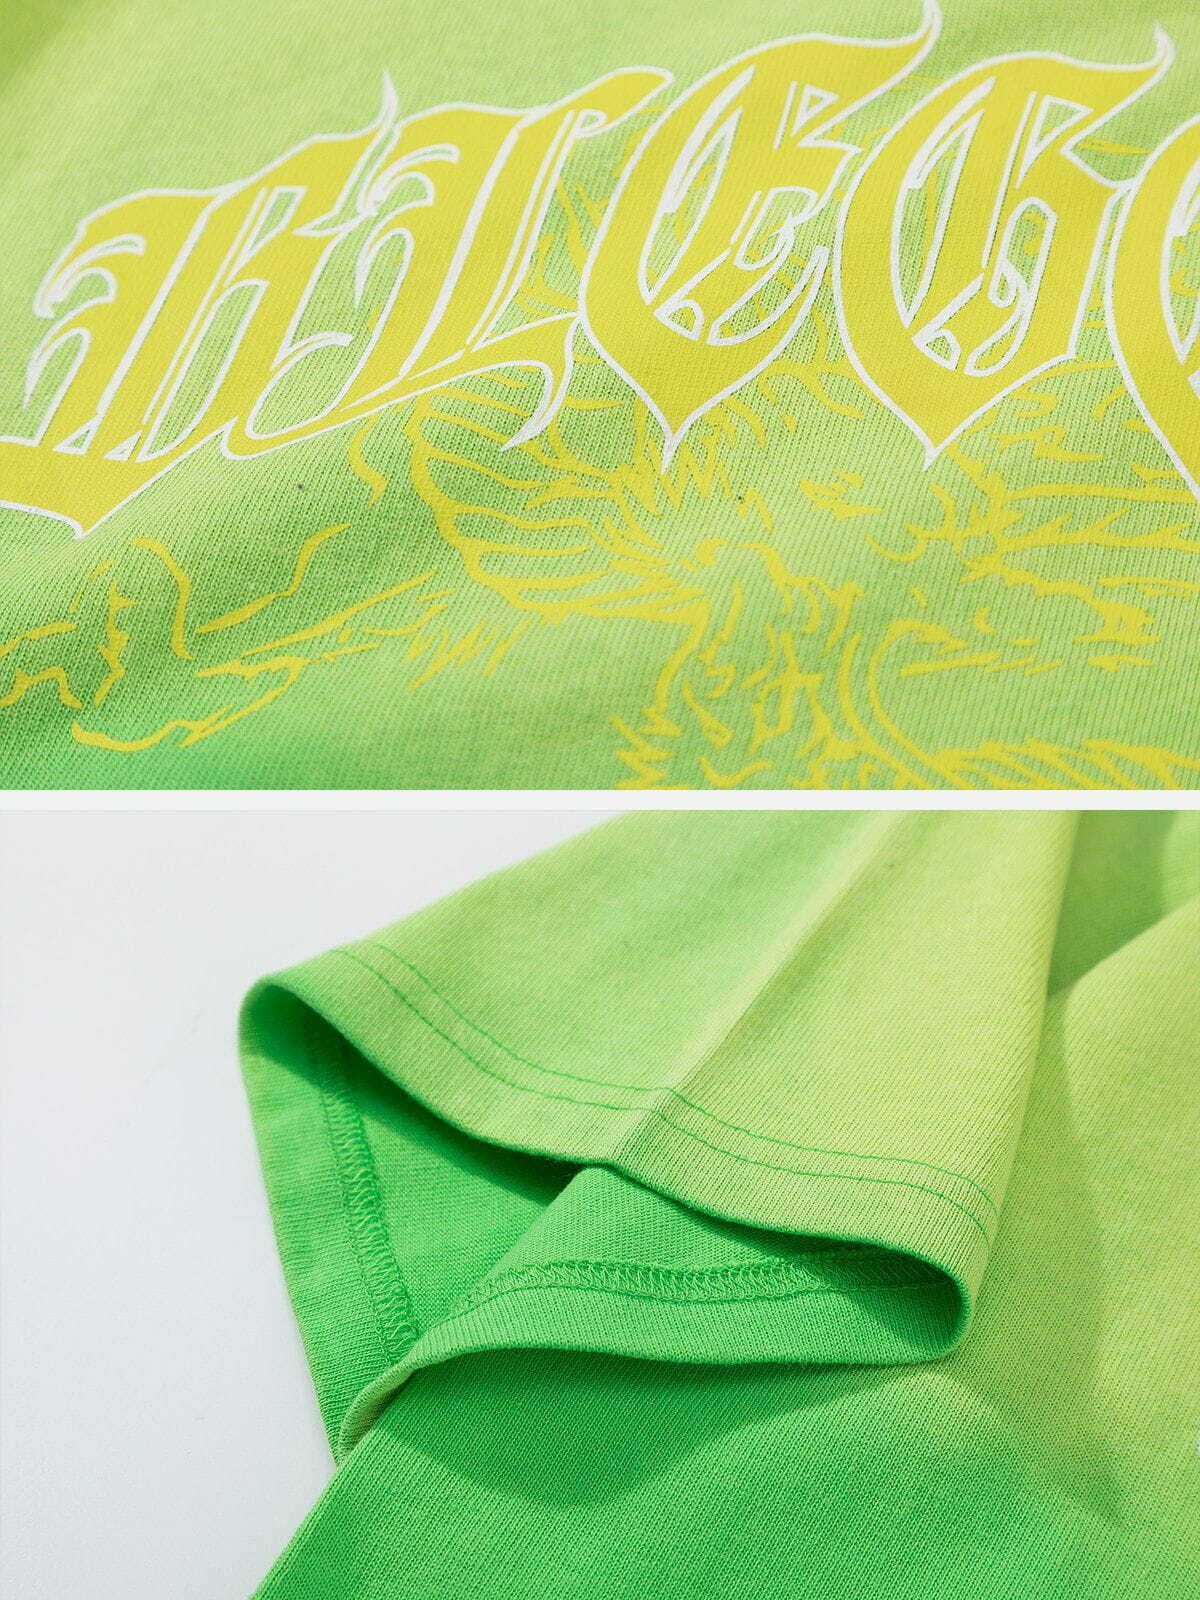 vibrant dragon print tee edgy streetwear shirt 8060